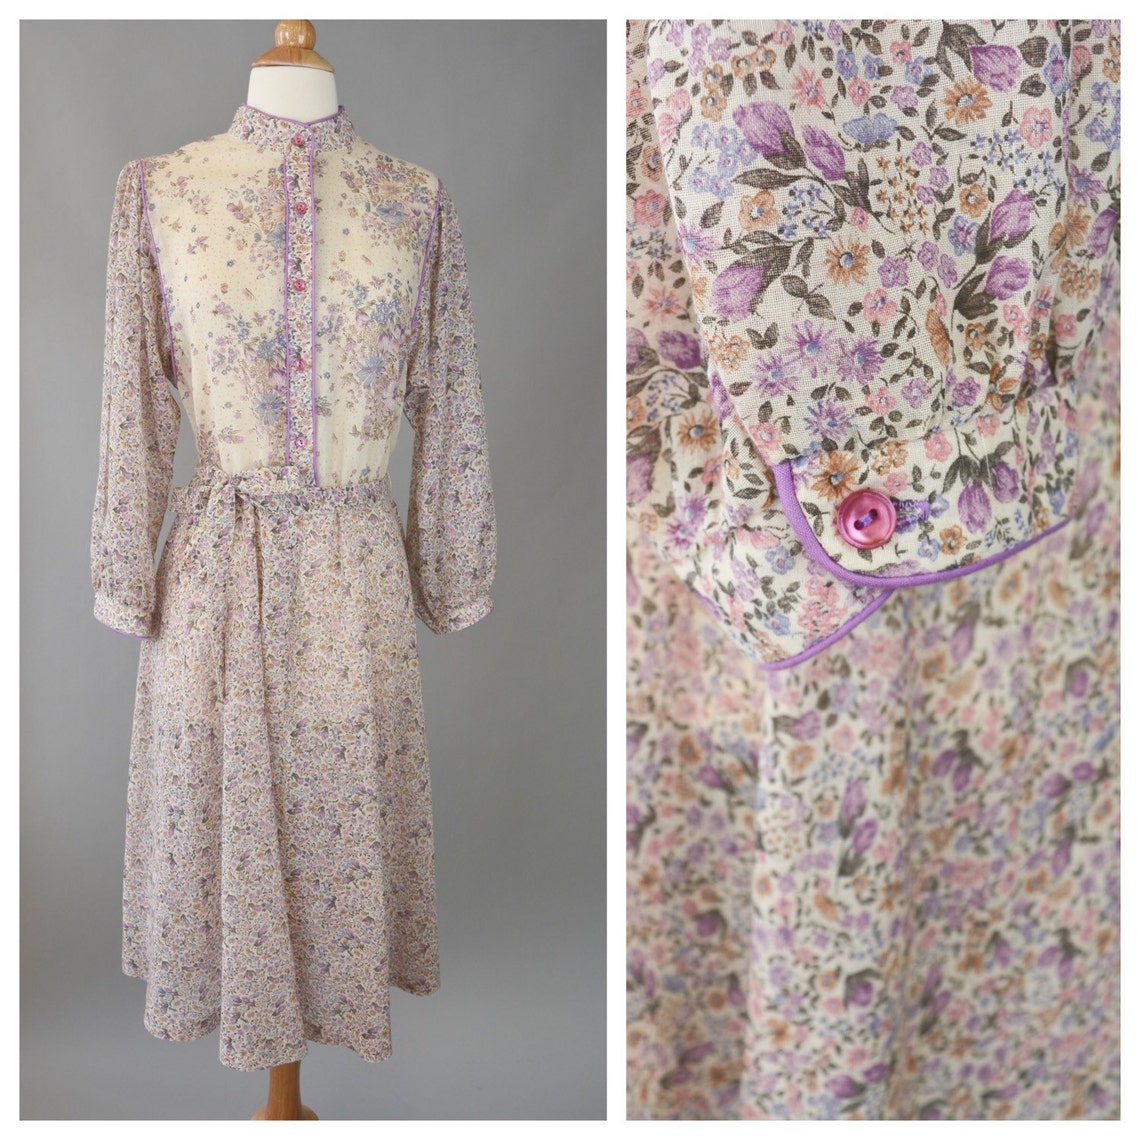 Boho Chic Vintage 70s Lavender Floral Dress // 1970s Cream | Etsy